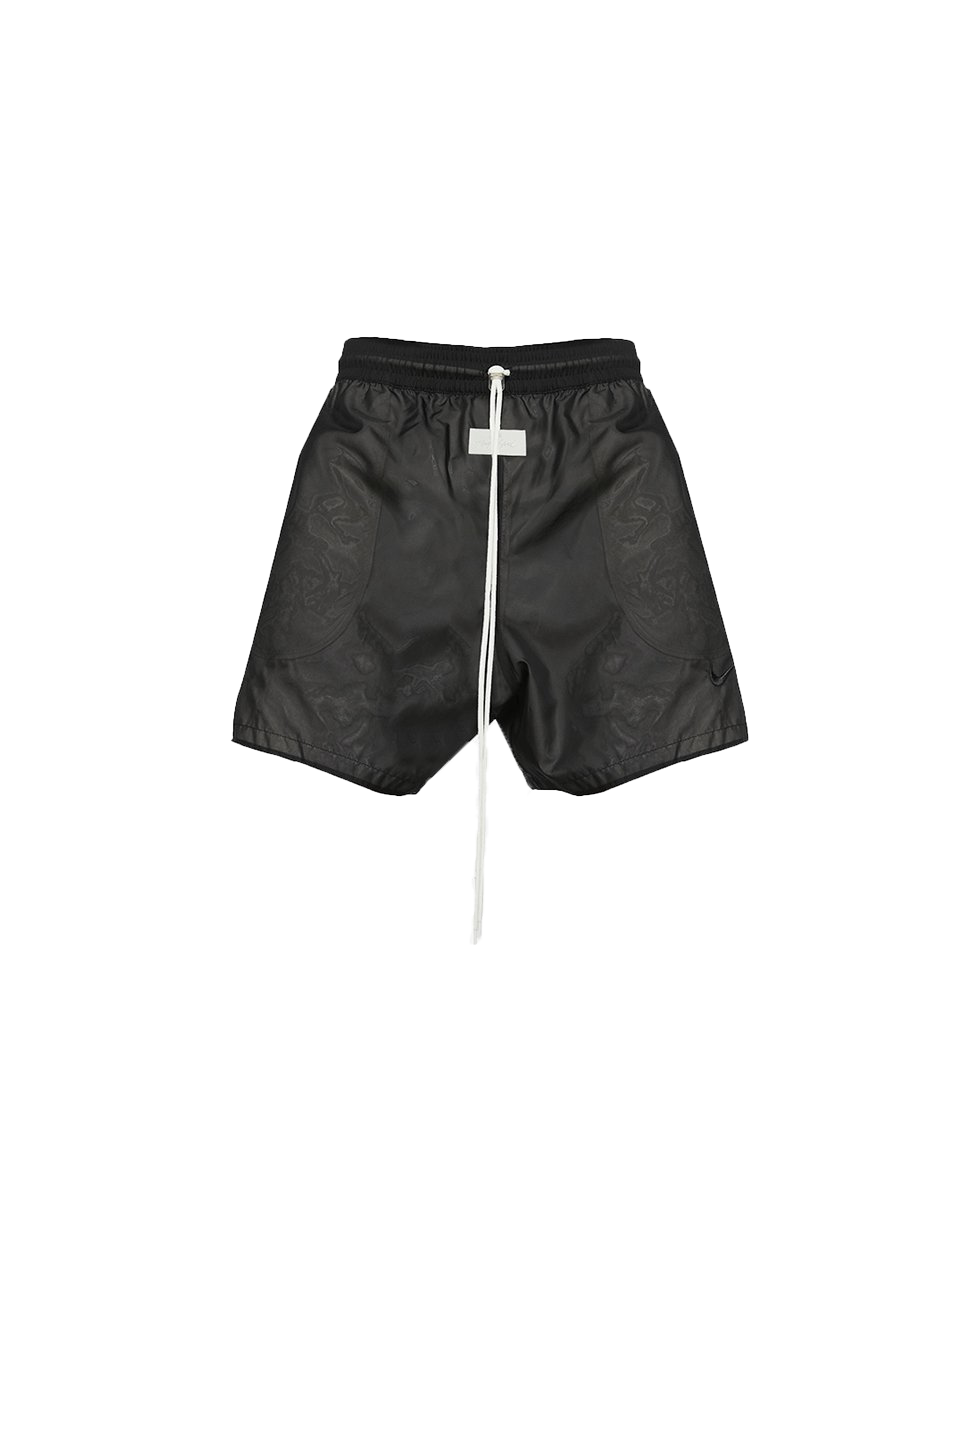 Pre-owned Fear Of God X Nike Stretch Shorts Black/light Bone/sail/black